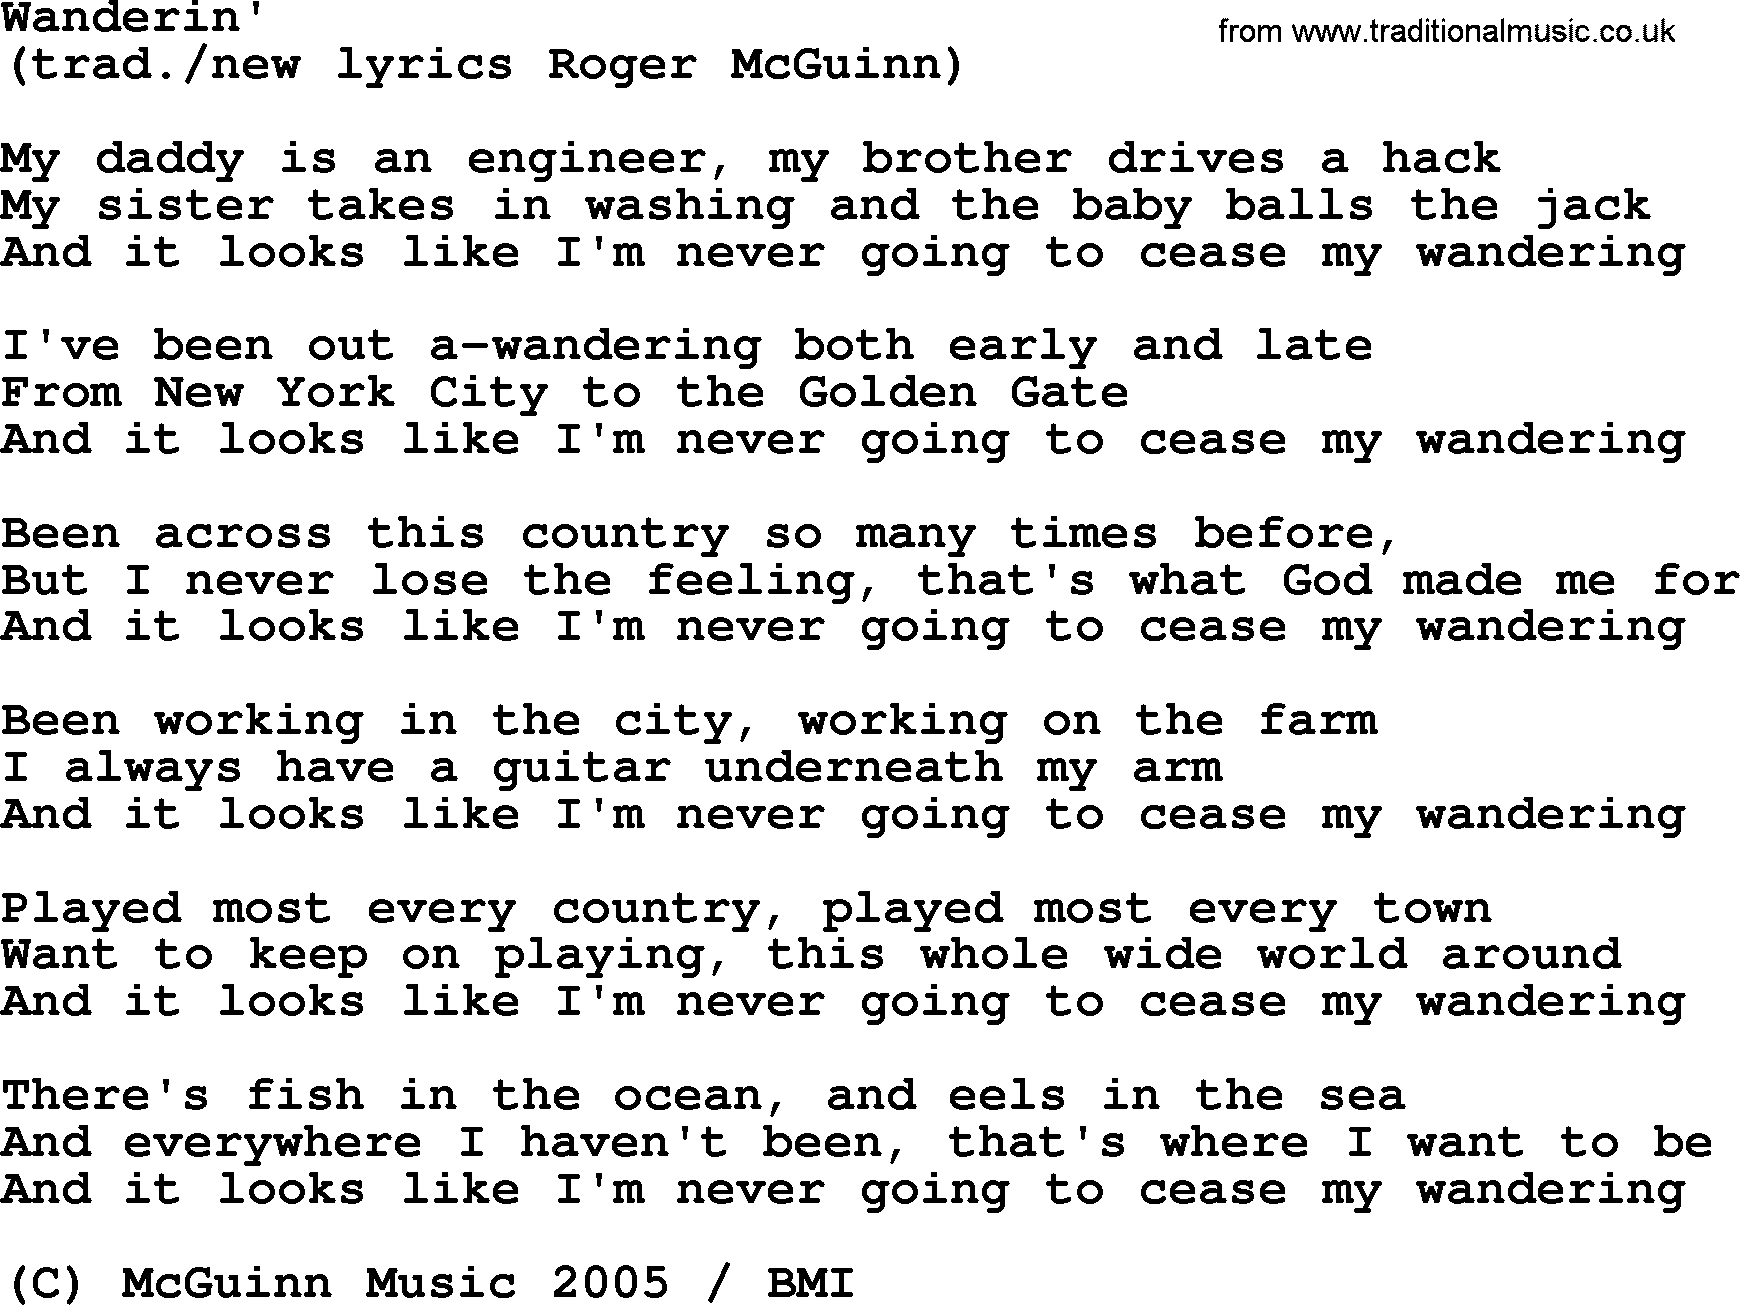 The Byrds song Wanderin', lyrics